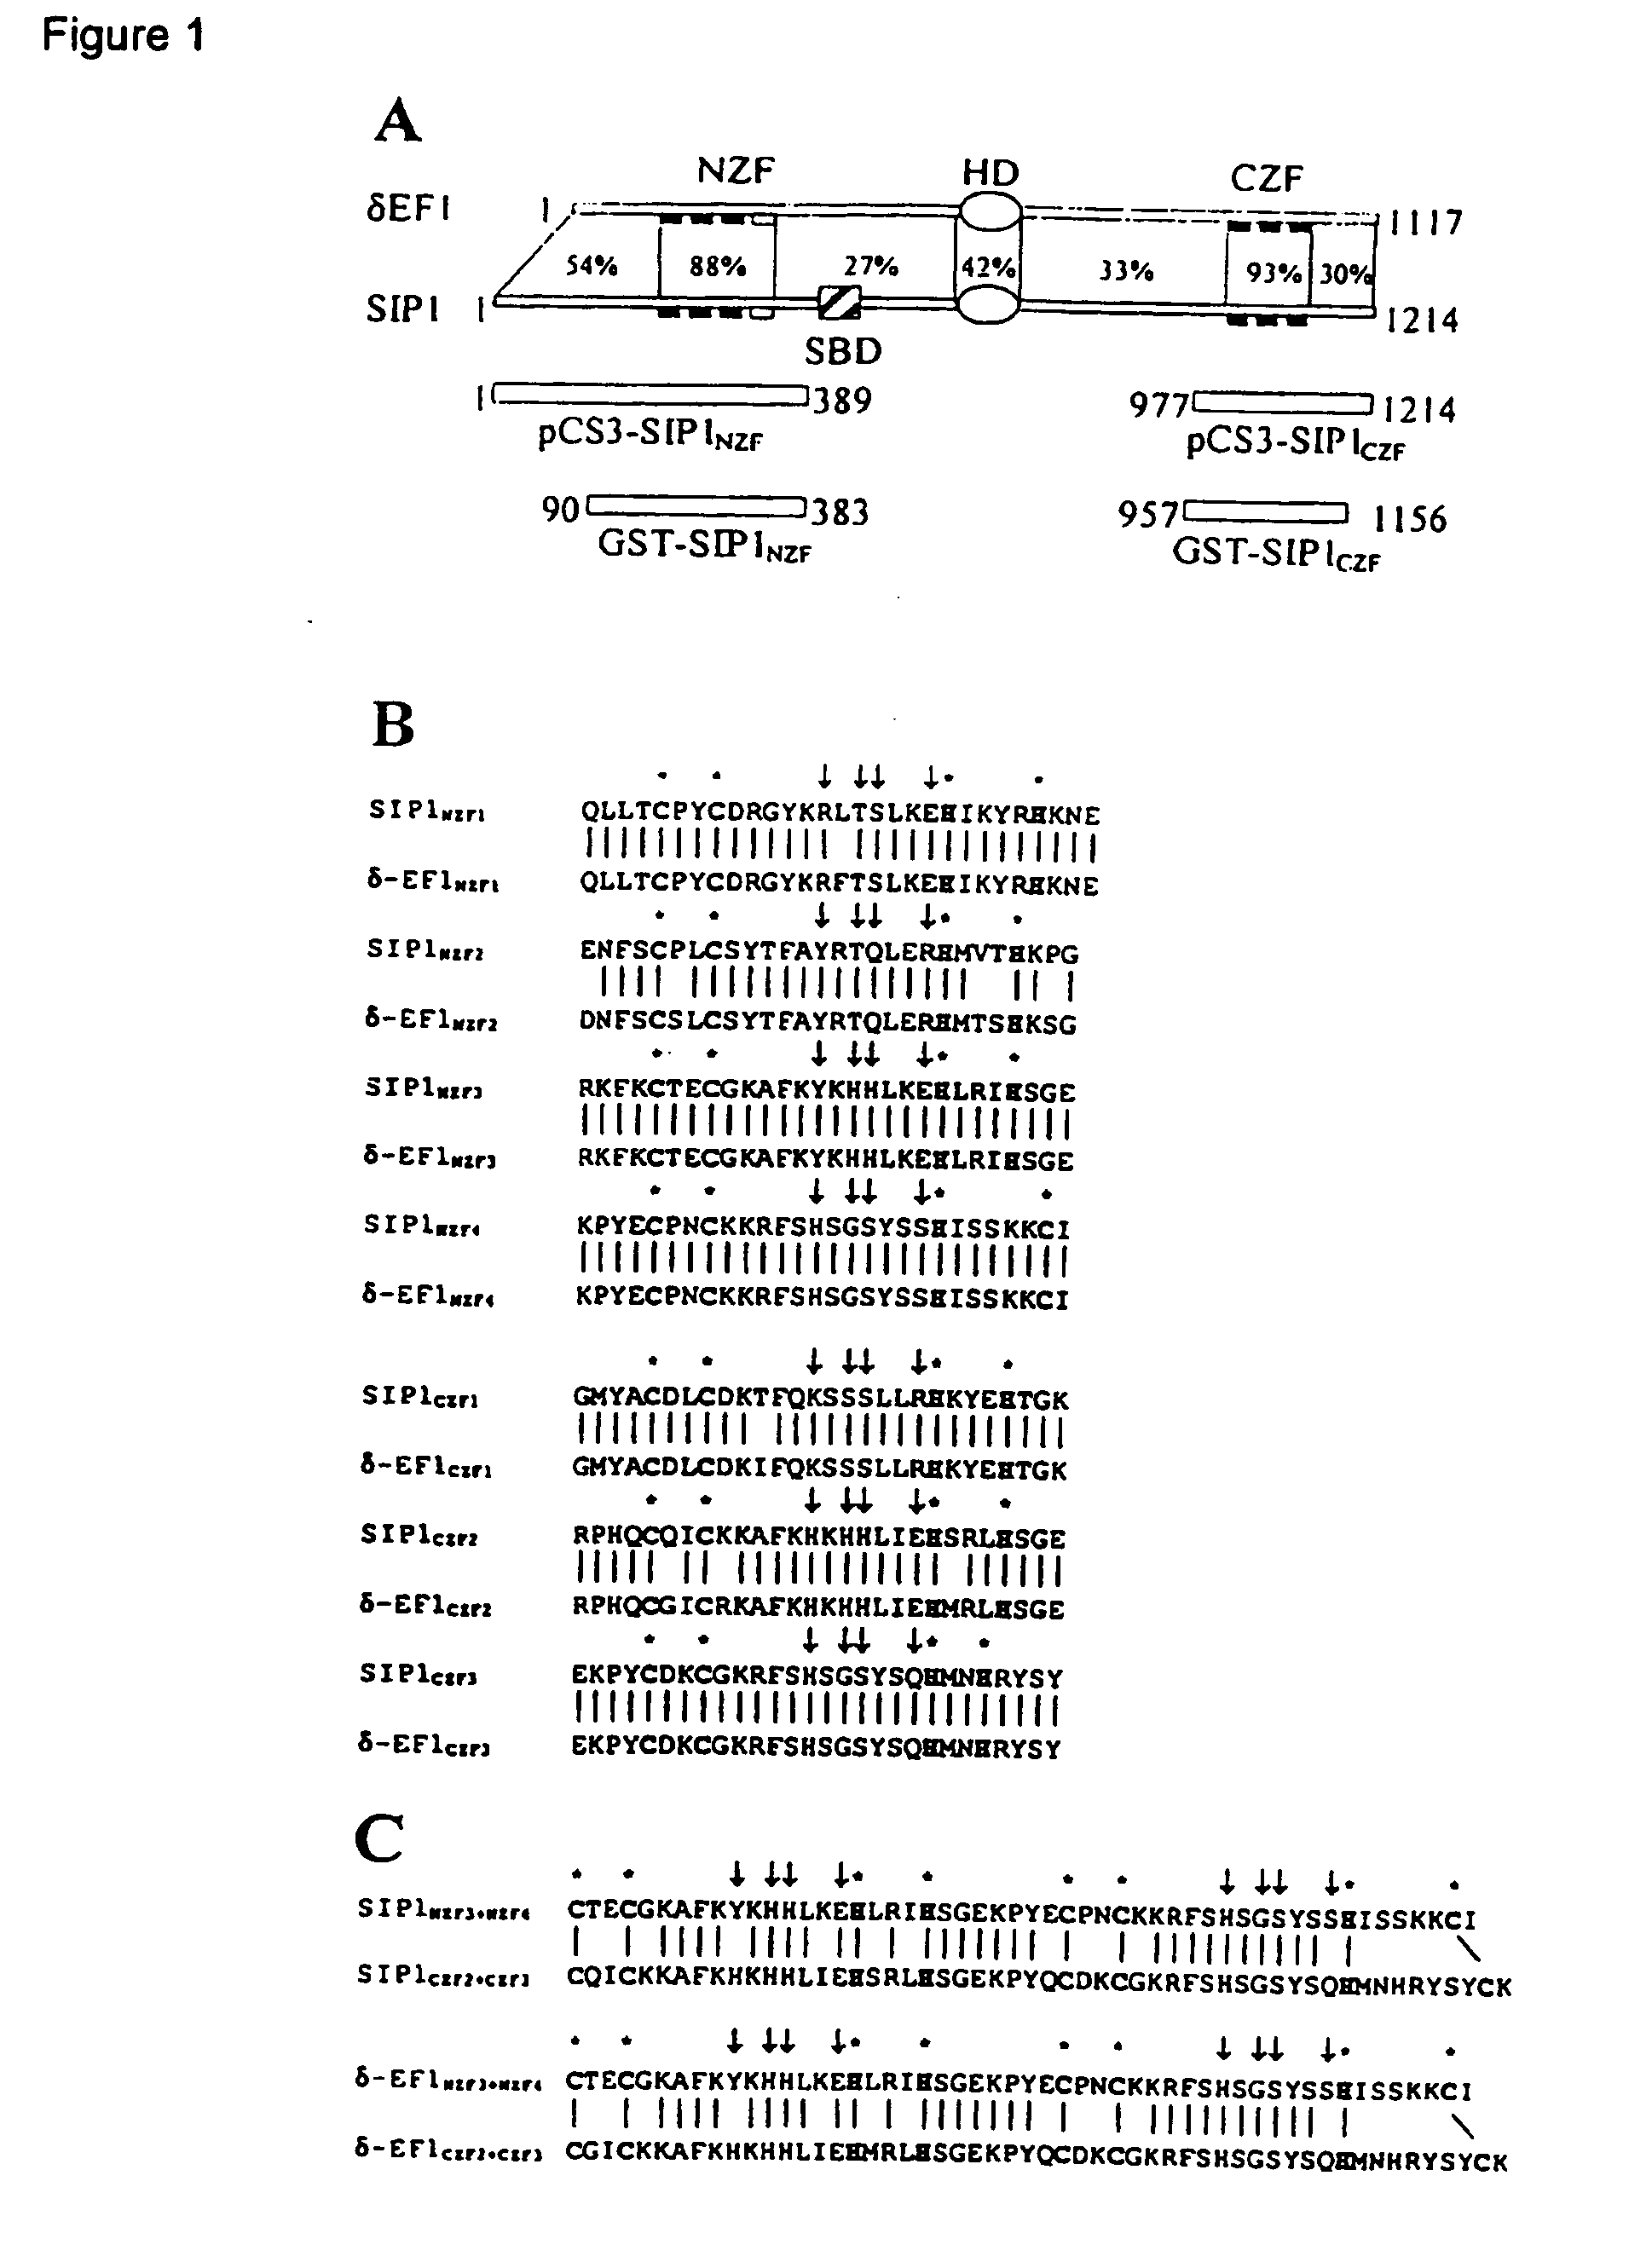 Nucleic acid binding of multi-zinc finger transcription factors